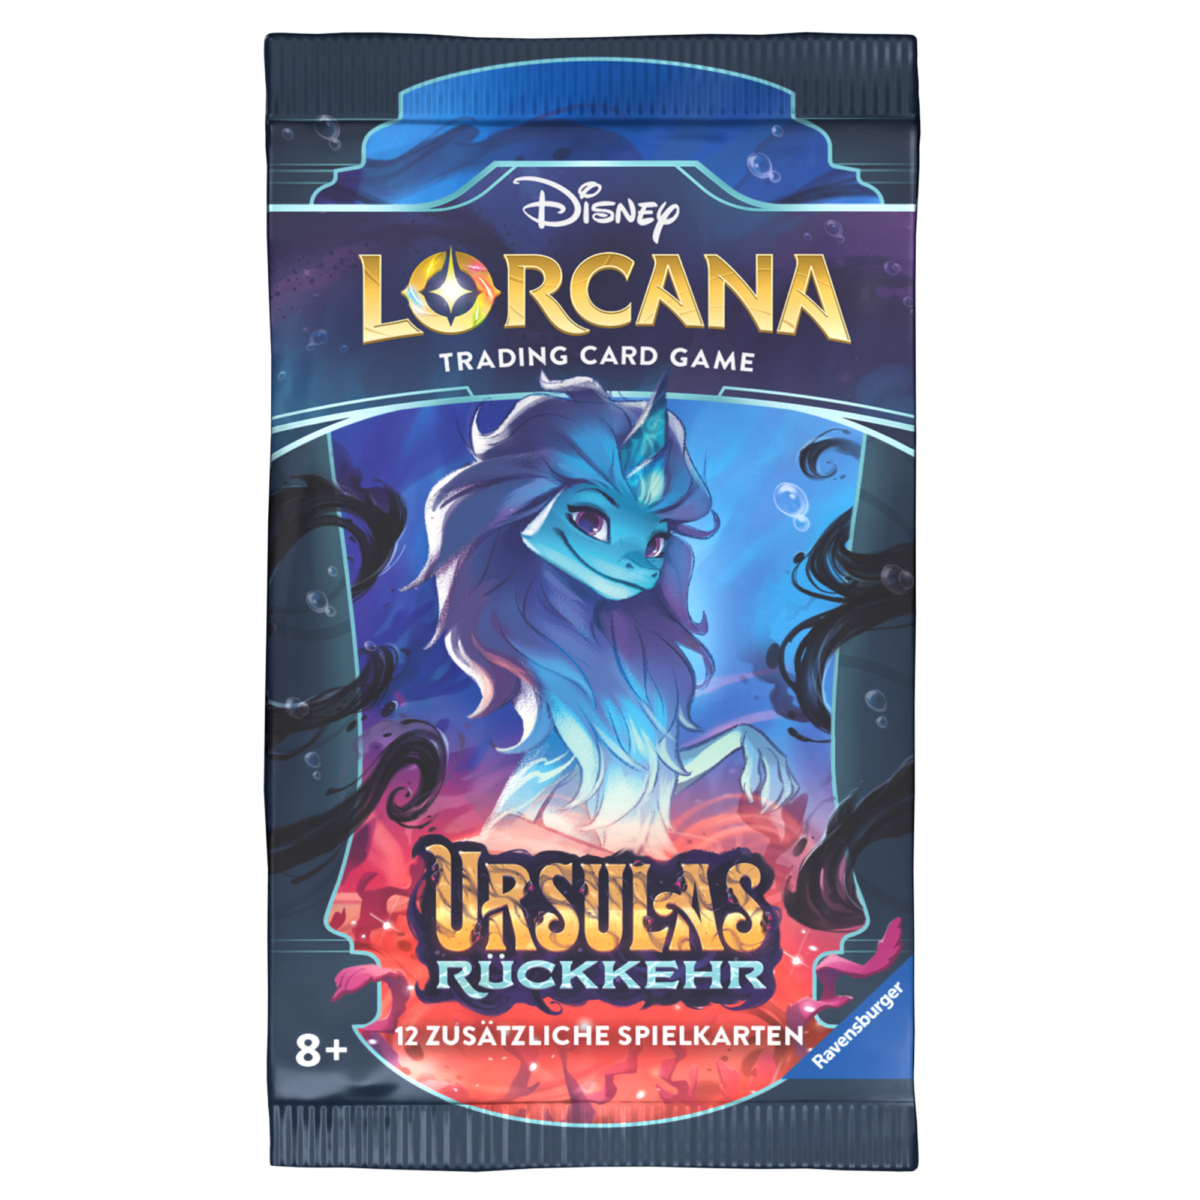 Disney Lorcana Trading Card Game: Kapitel 4 - Ursulas Rückkehr: Booster Pack Sisu